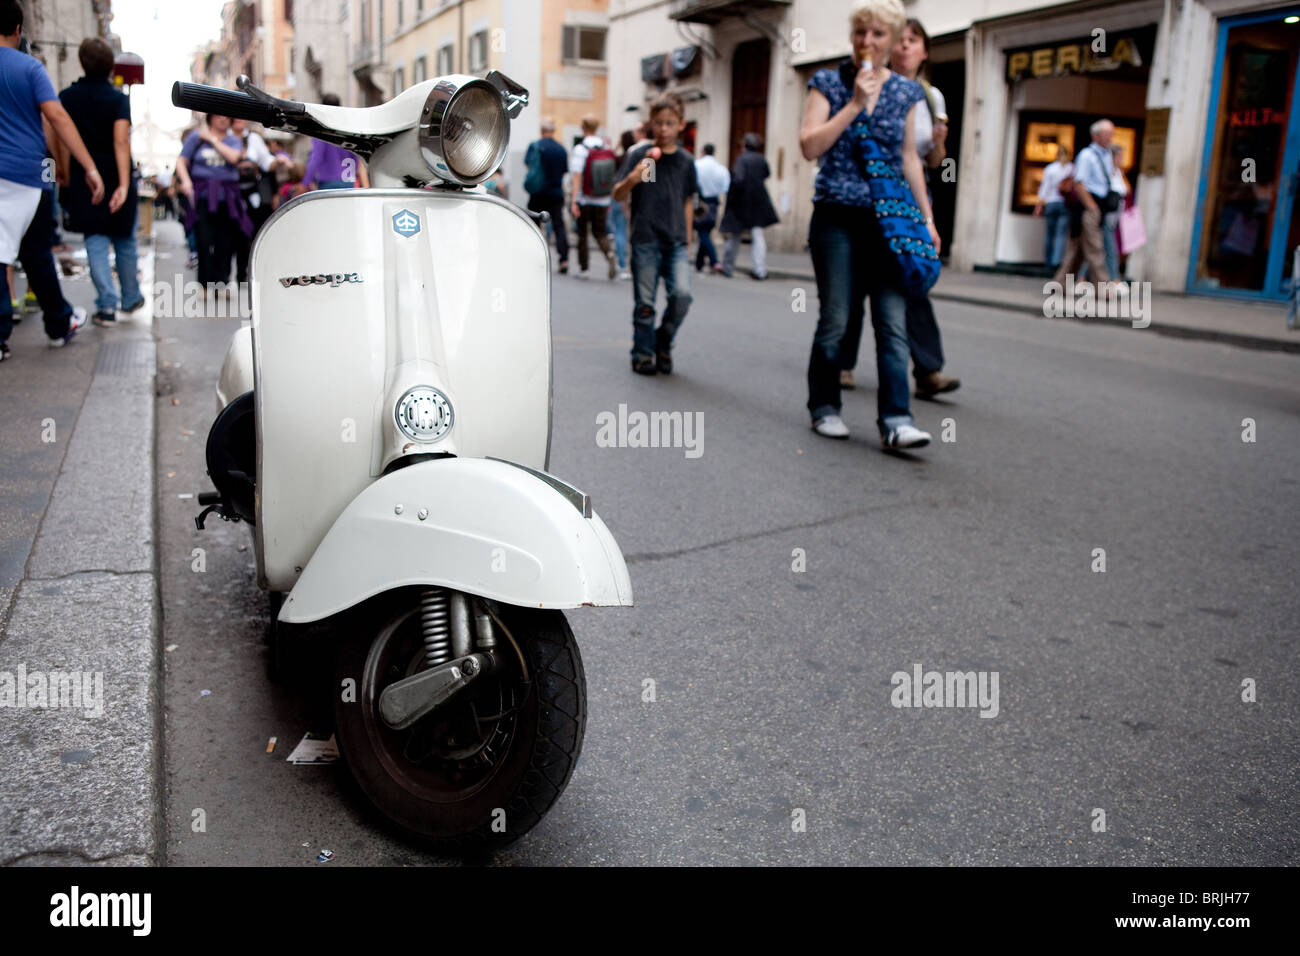 Vespa scooter Piaggio vieille moto Rome Italie Banque D'Images